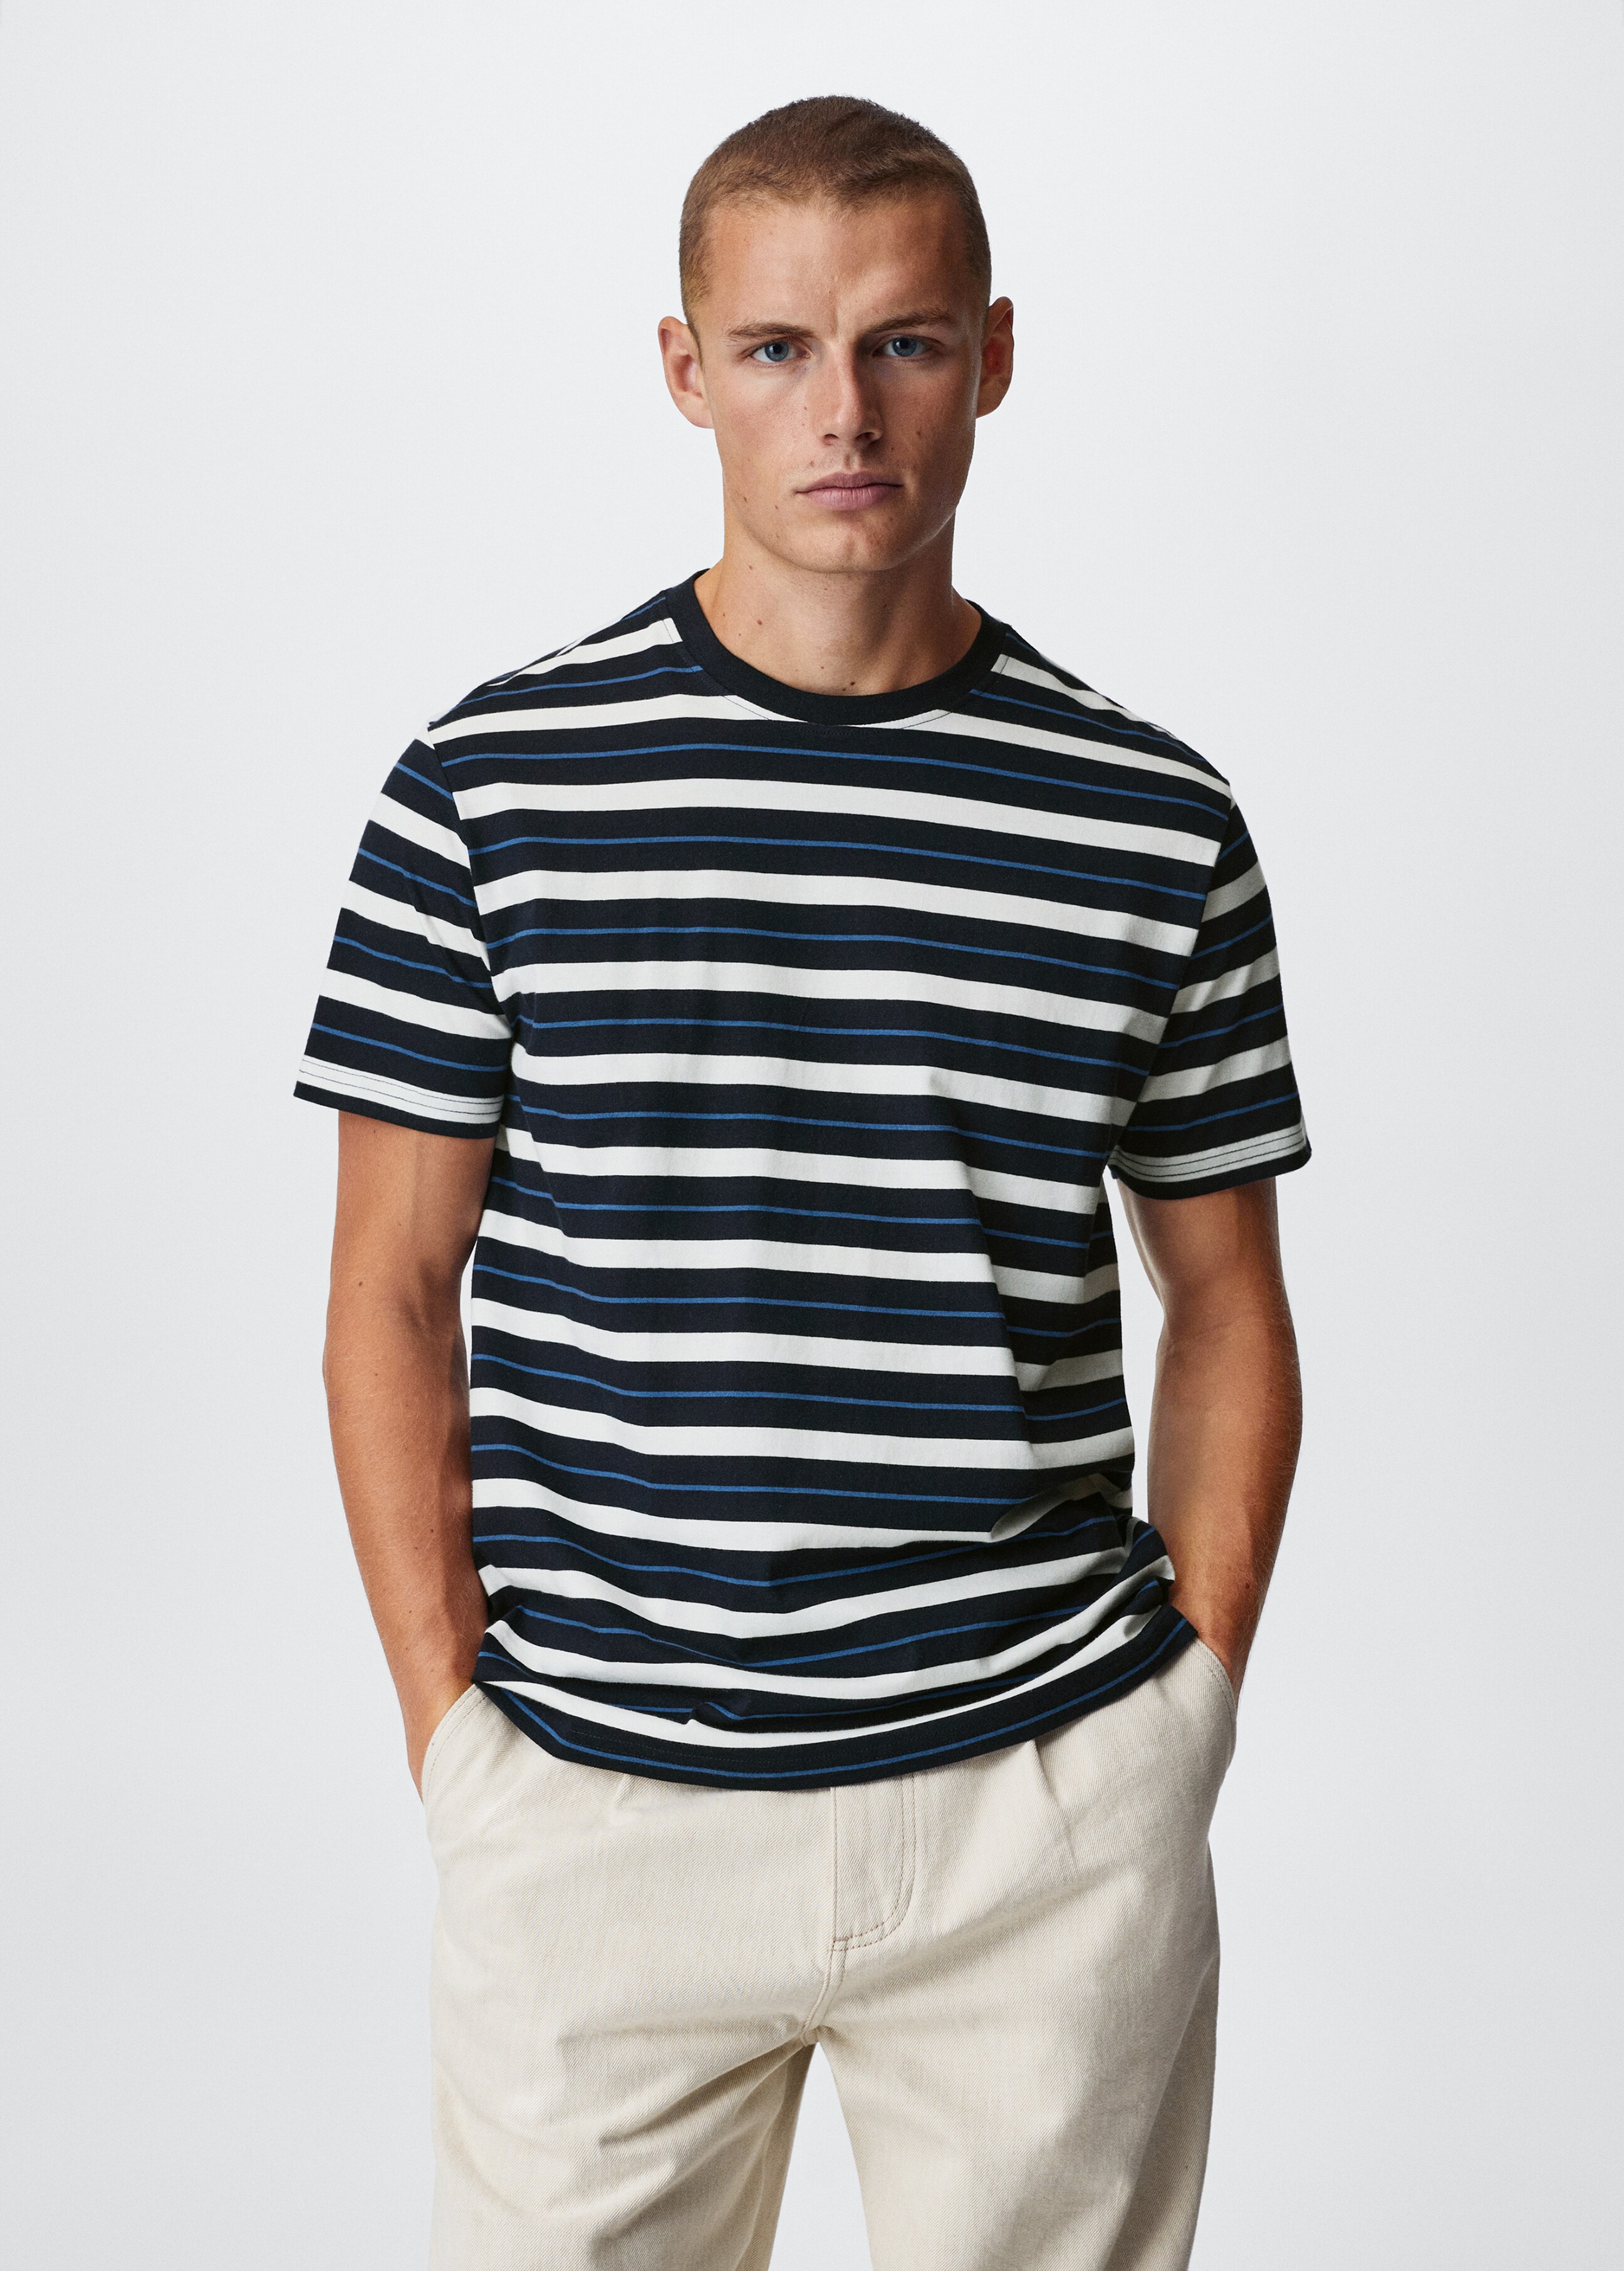 Striped cotton T-shirt - Medium plane